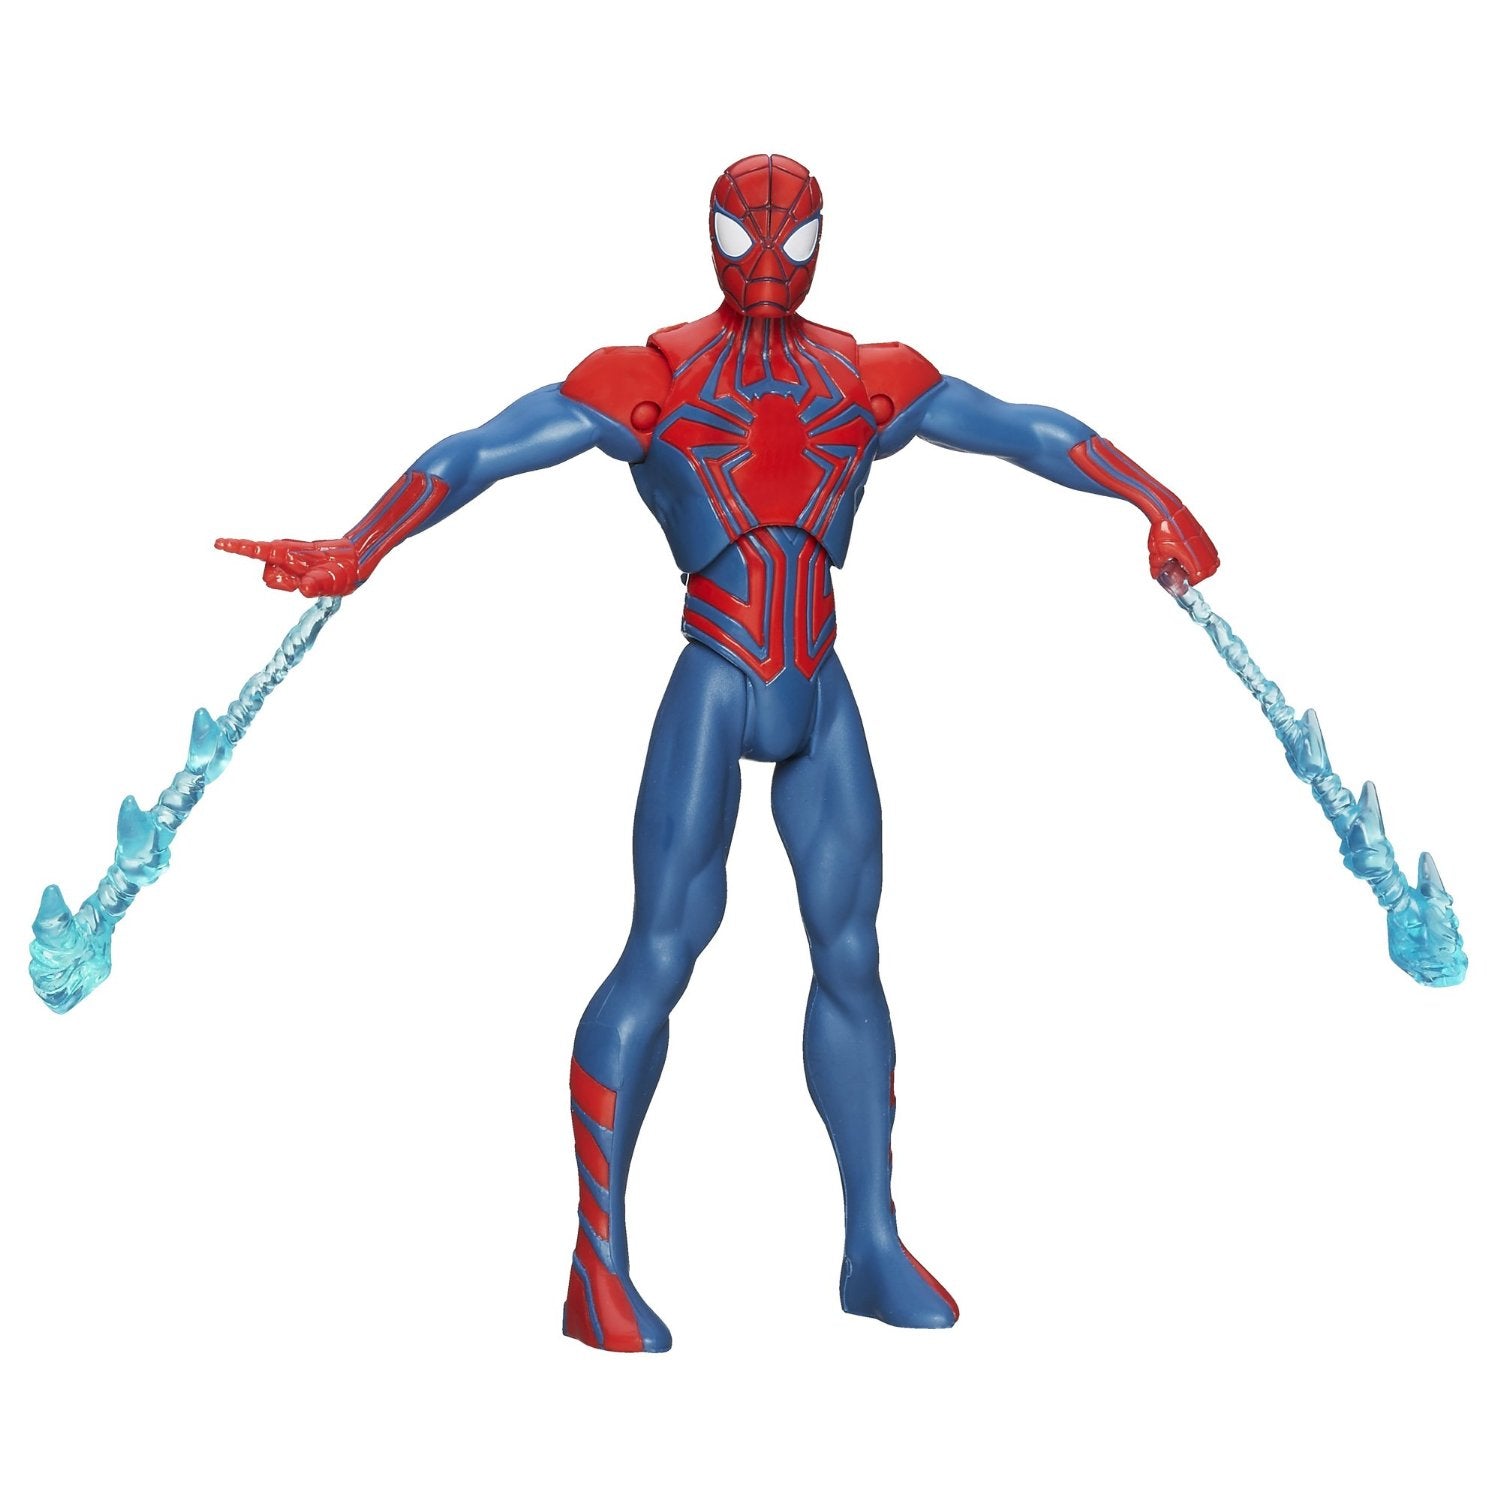 Spider-Man Action Figures - Ultimate Webb Whirl Wind Spider-Man